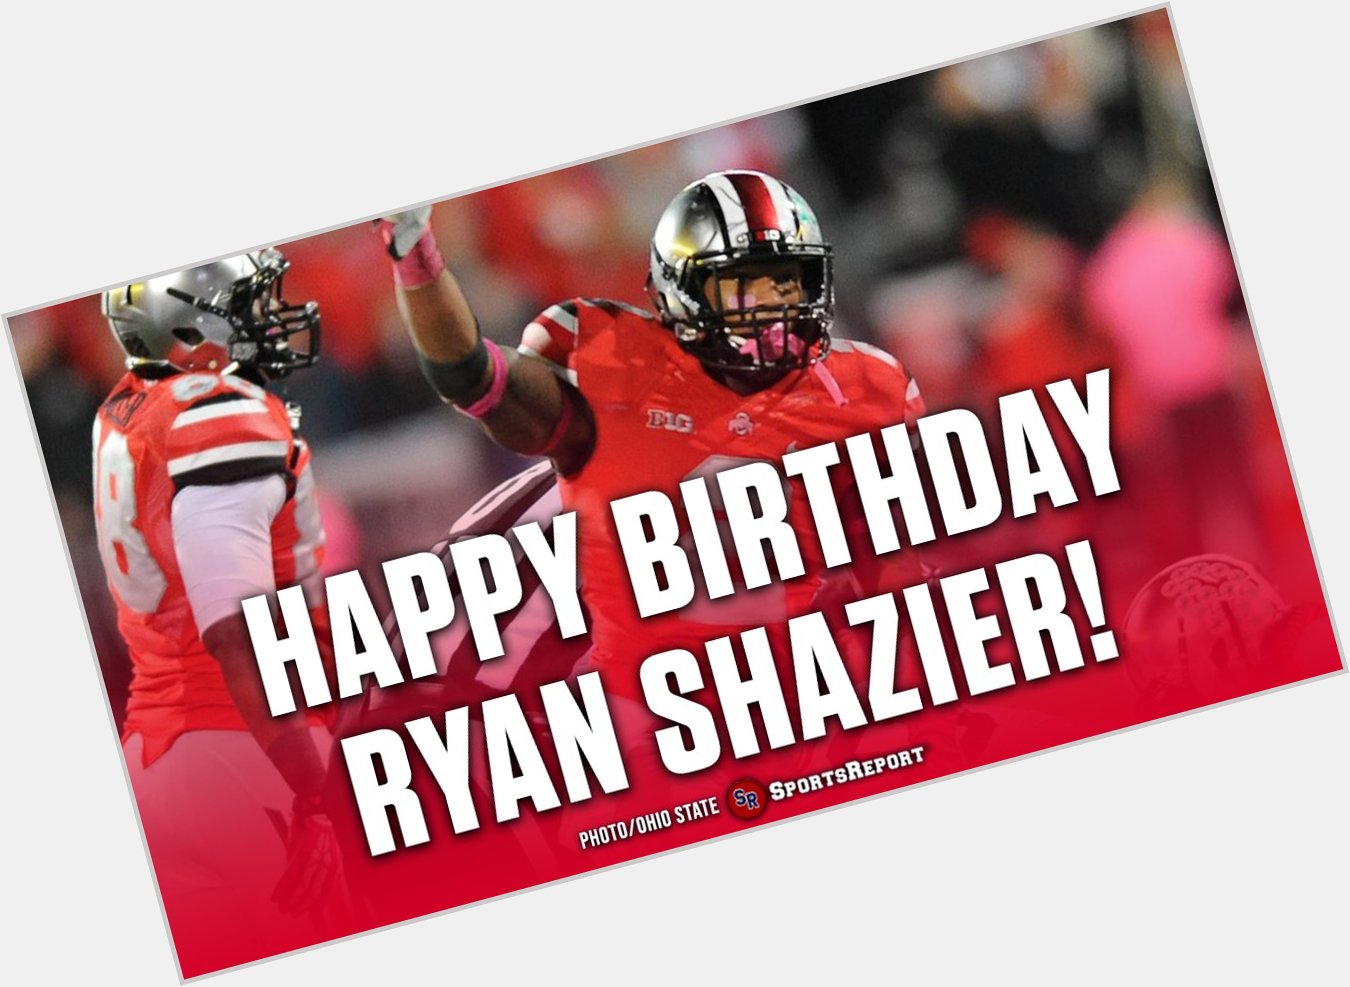  Fans, let\s wish Ryan Shazier a Happy Birthday! GO 